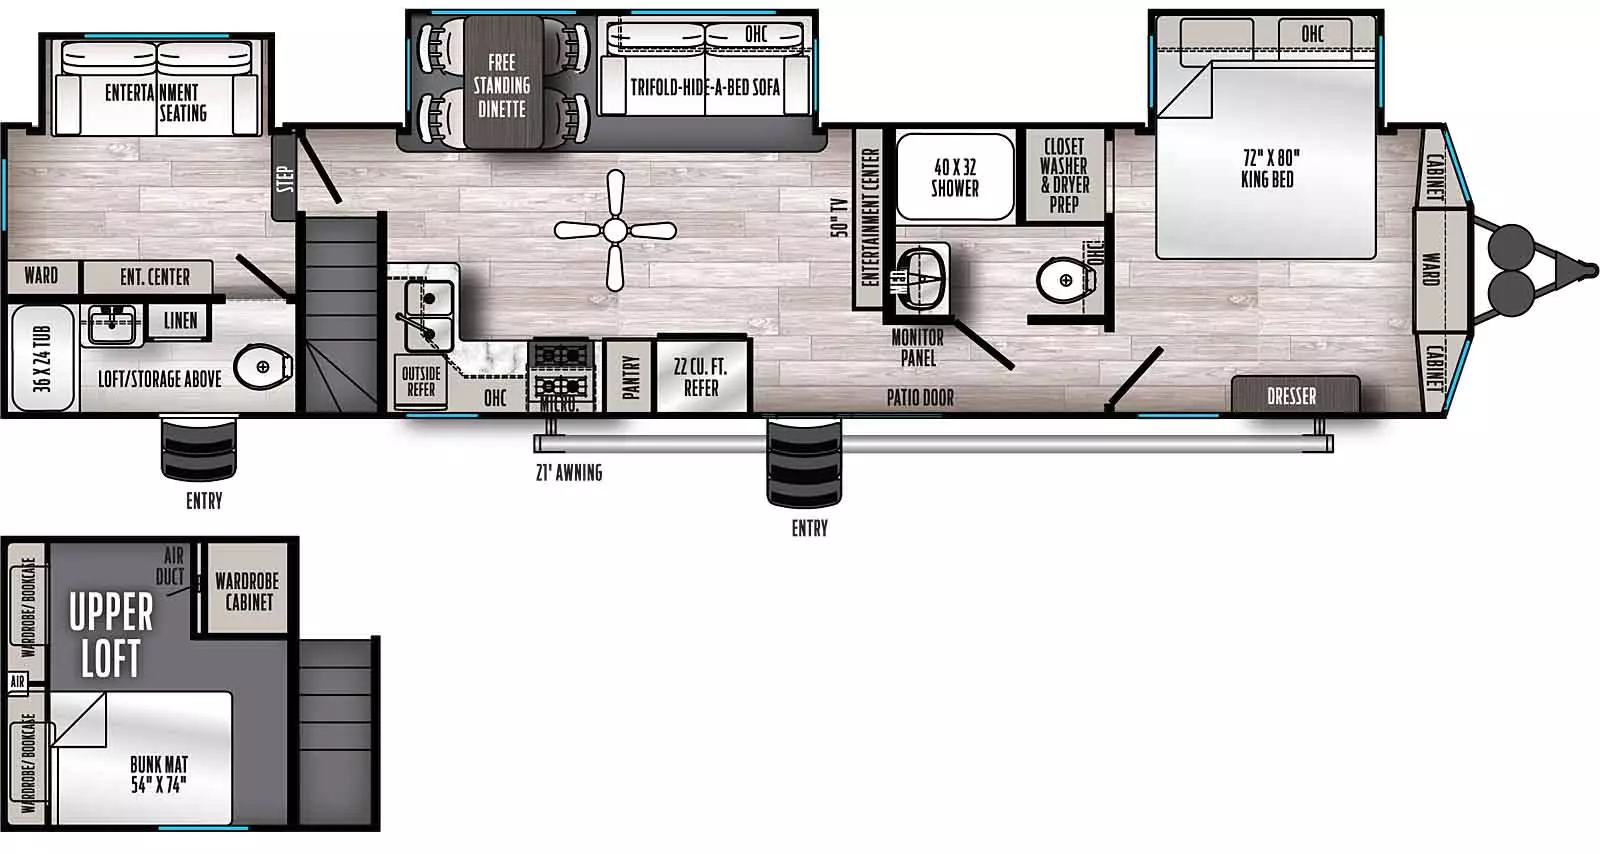 400BH Floorplan Image